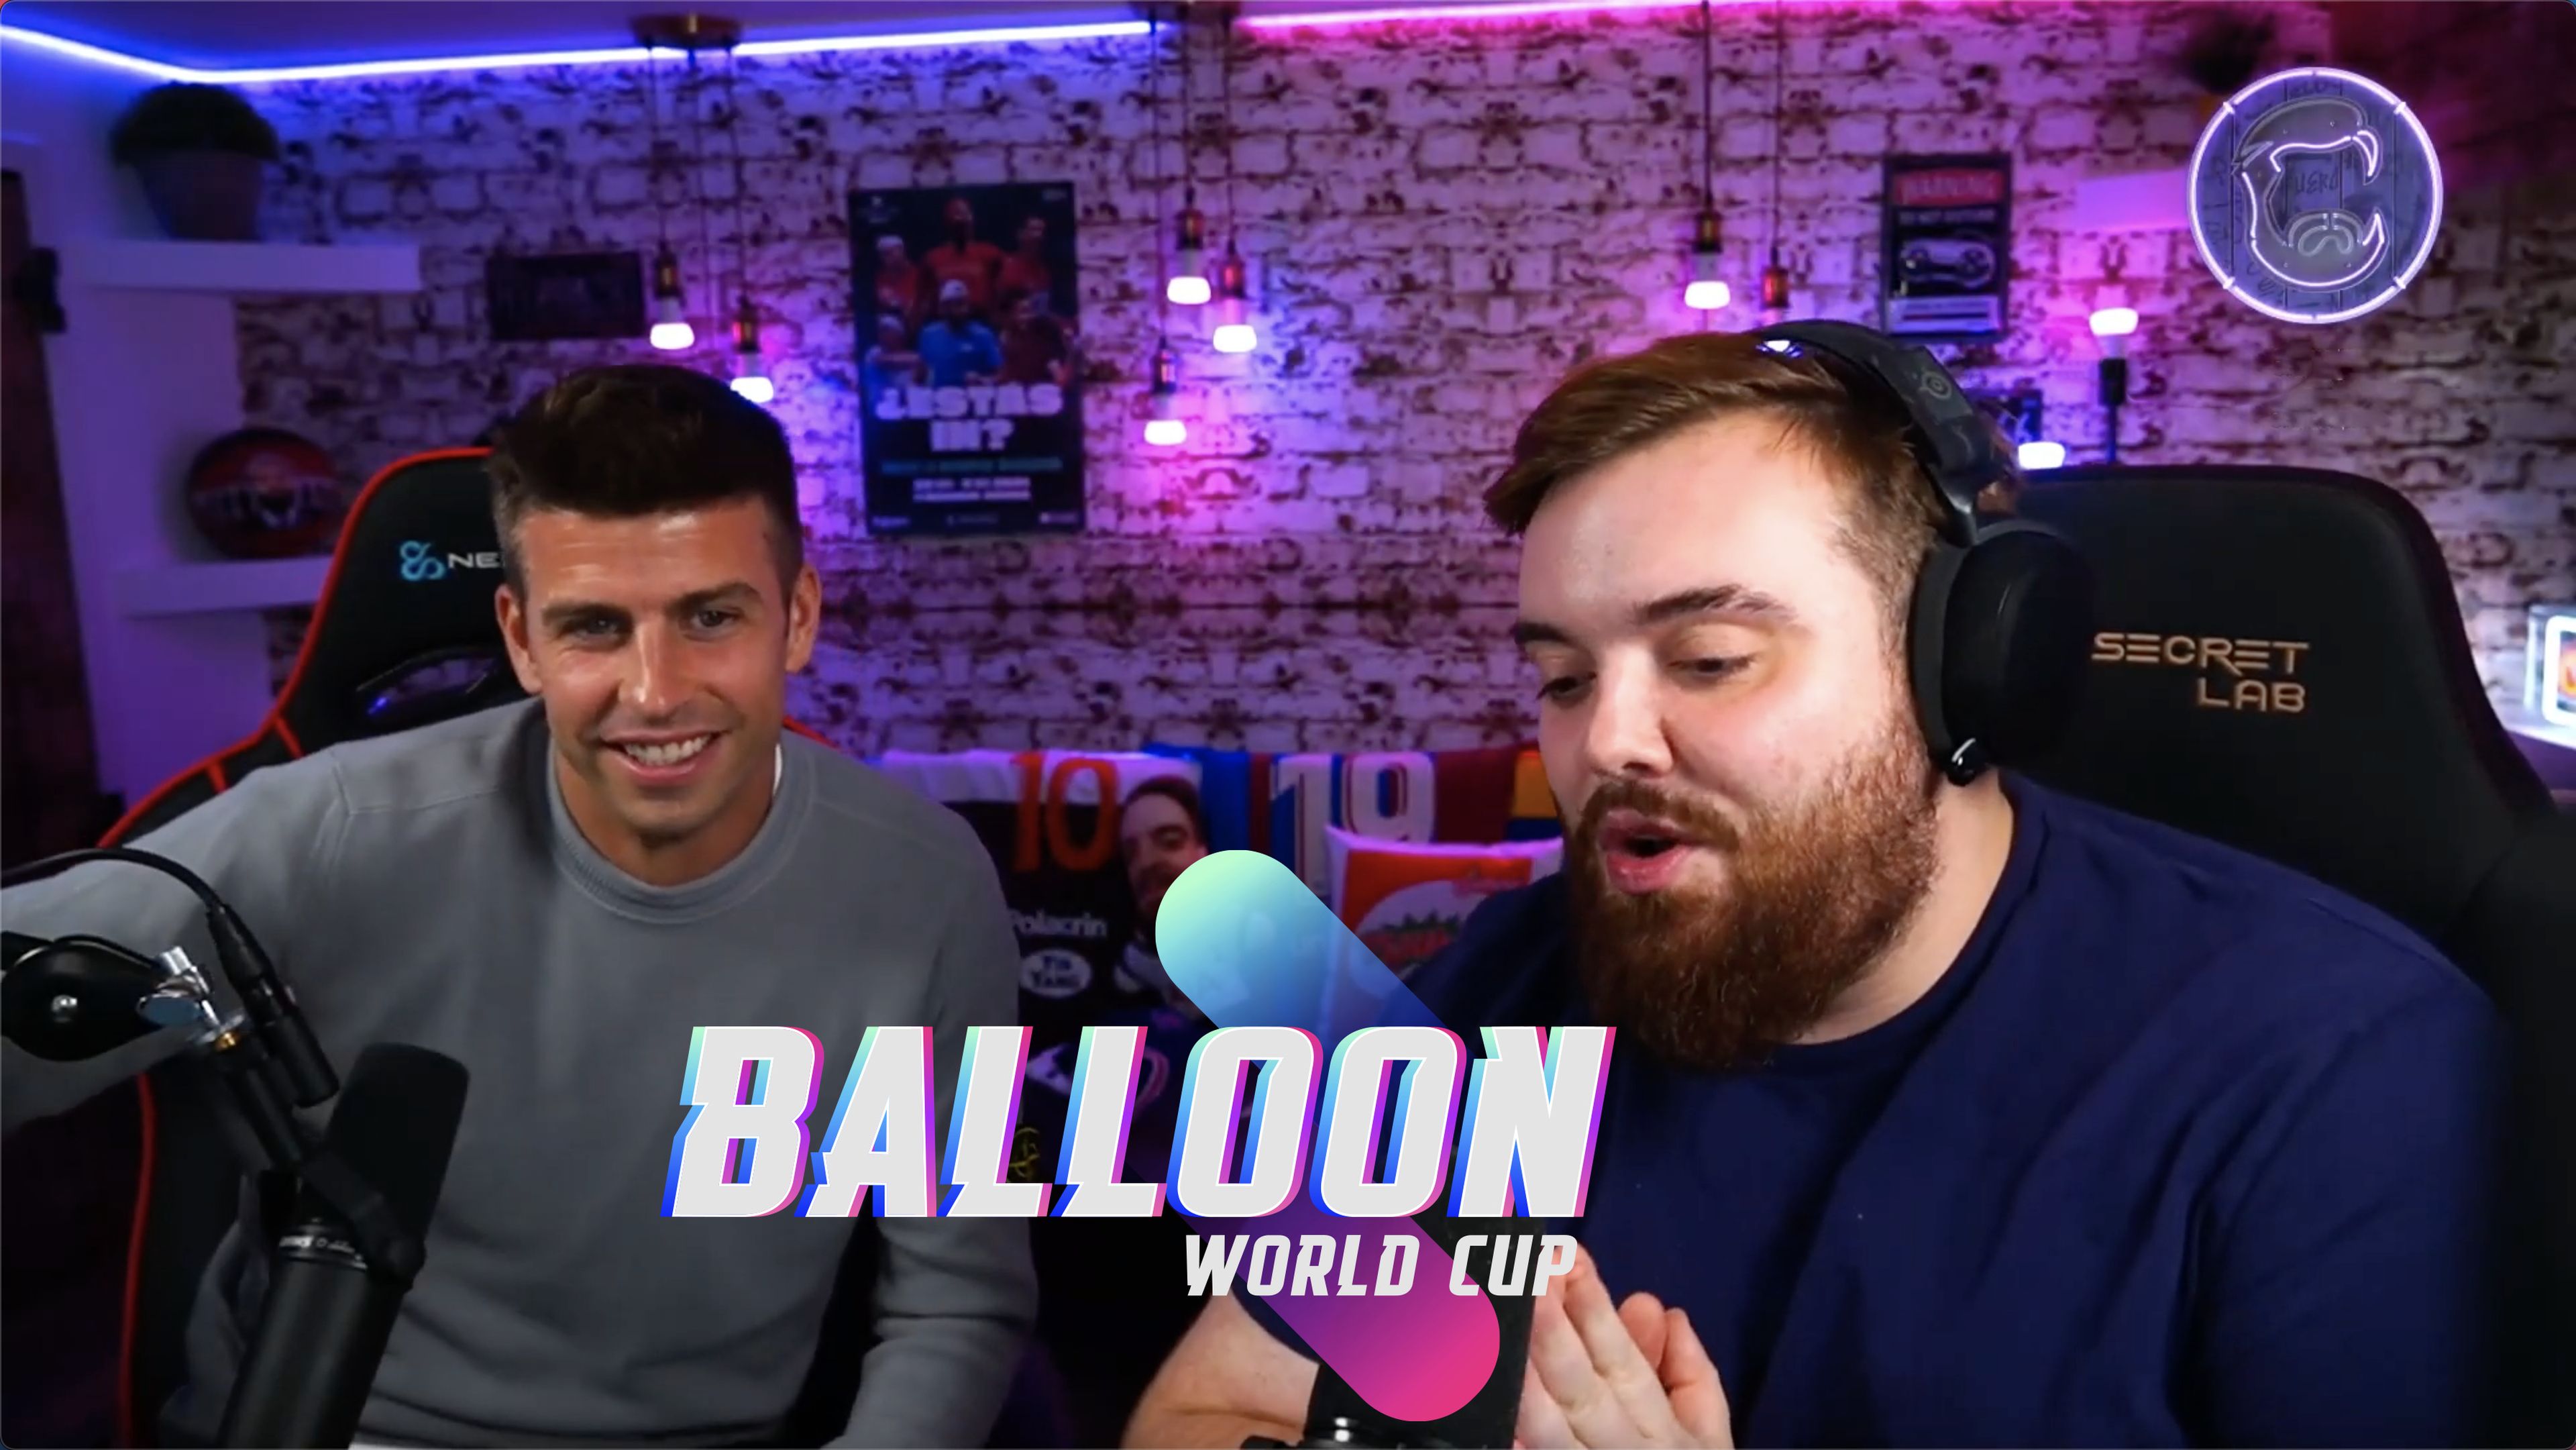 Balloon World Cup 2022